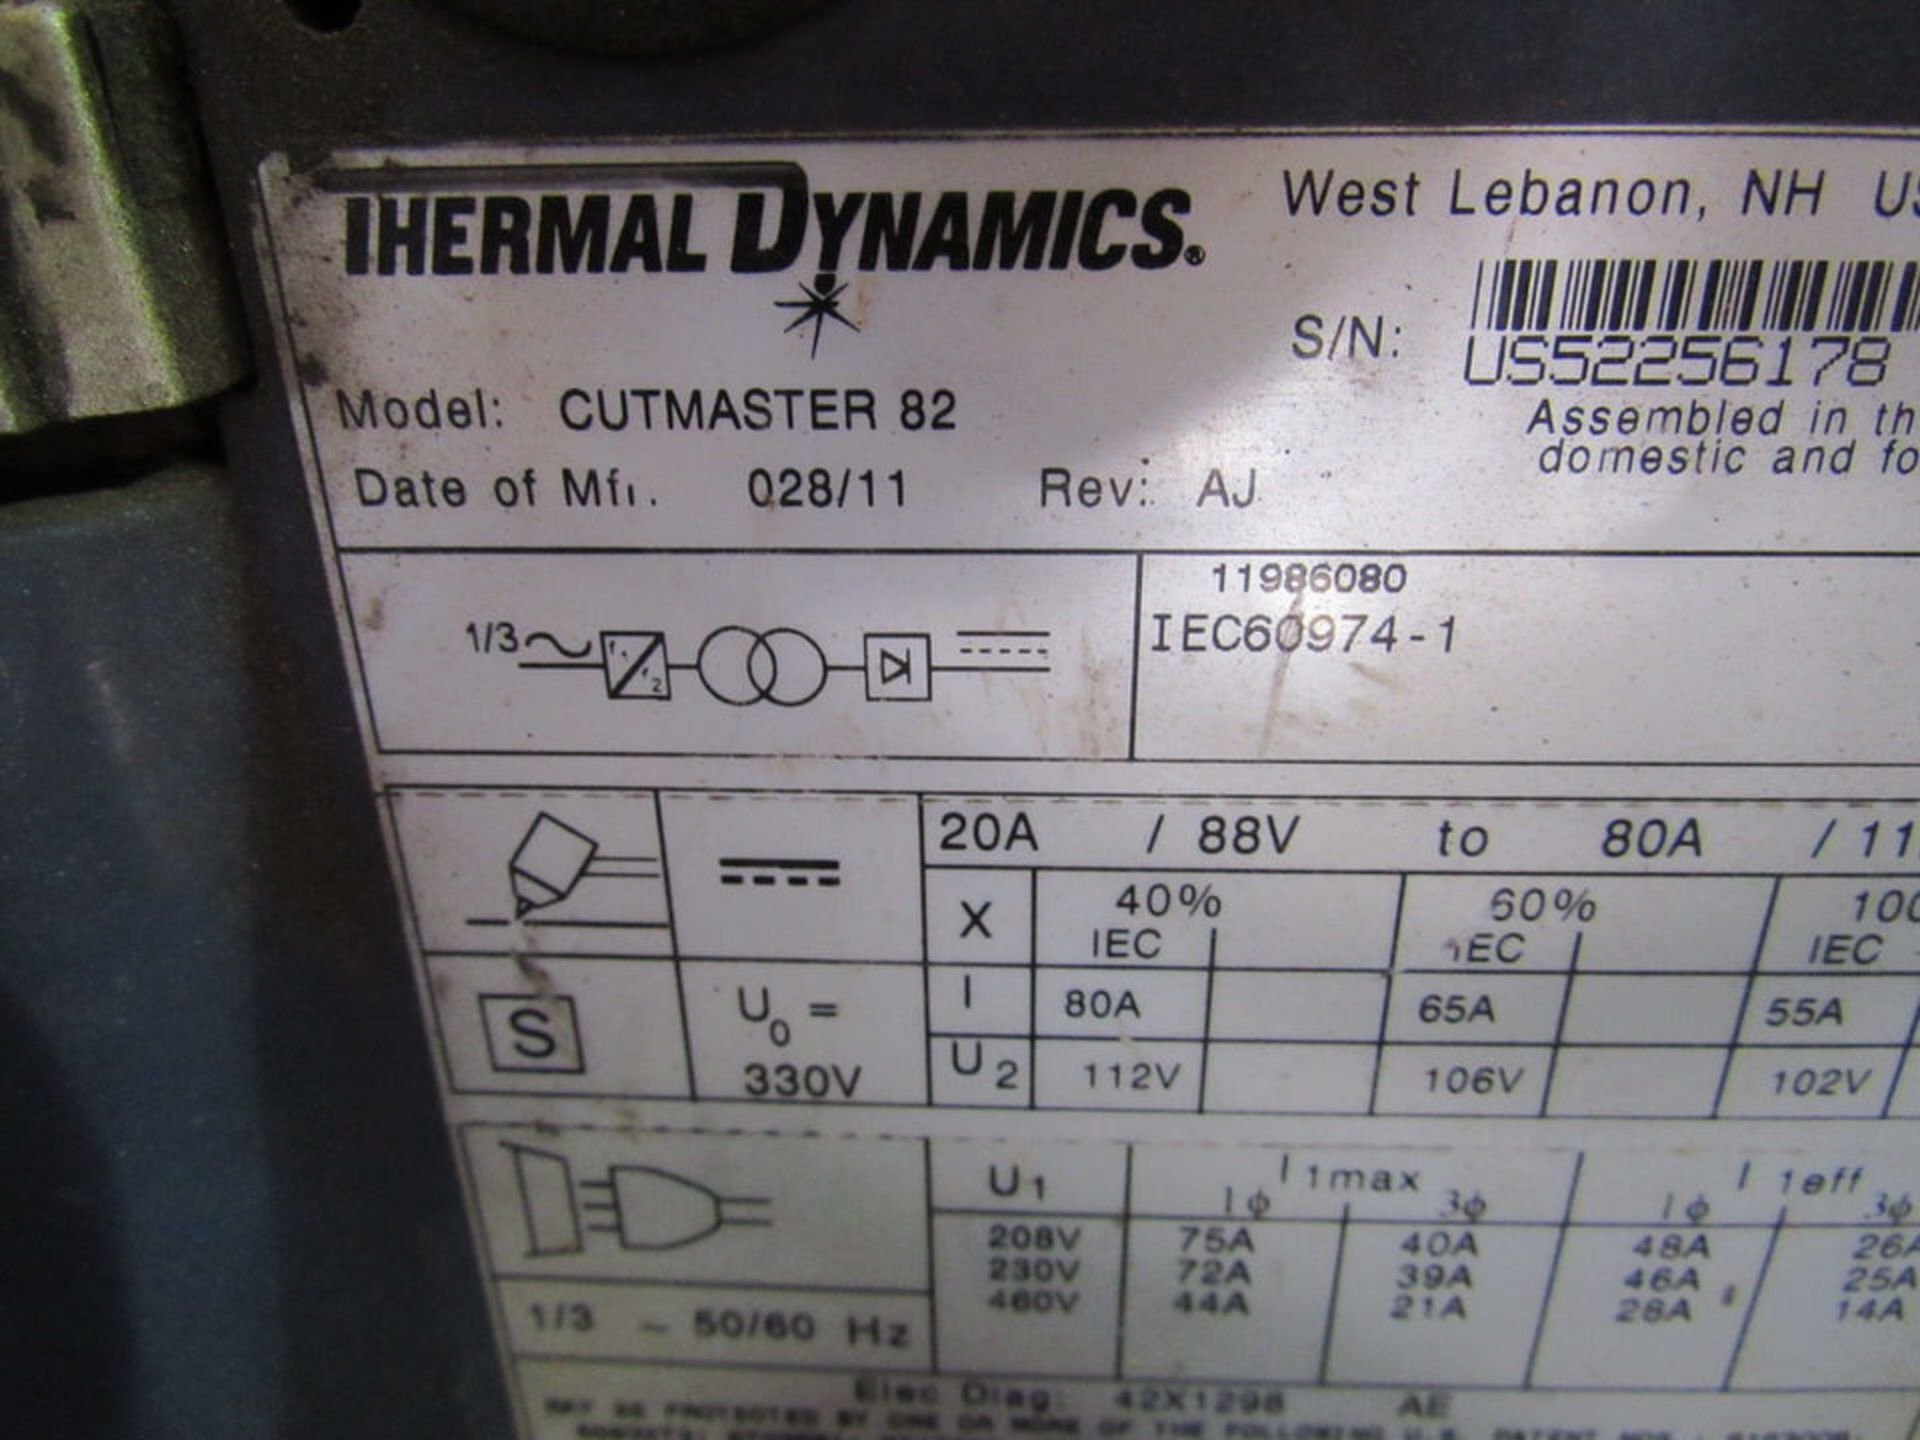 Thermal Dynamics Model Cutmaster 82 Manual Cutting Torch, 3/4" - 1-1/2" manual cuts, 5/8" pierce, - Image 3 of 3